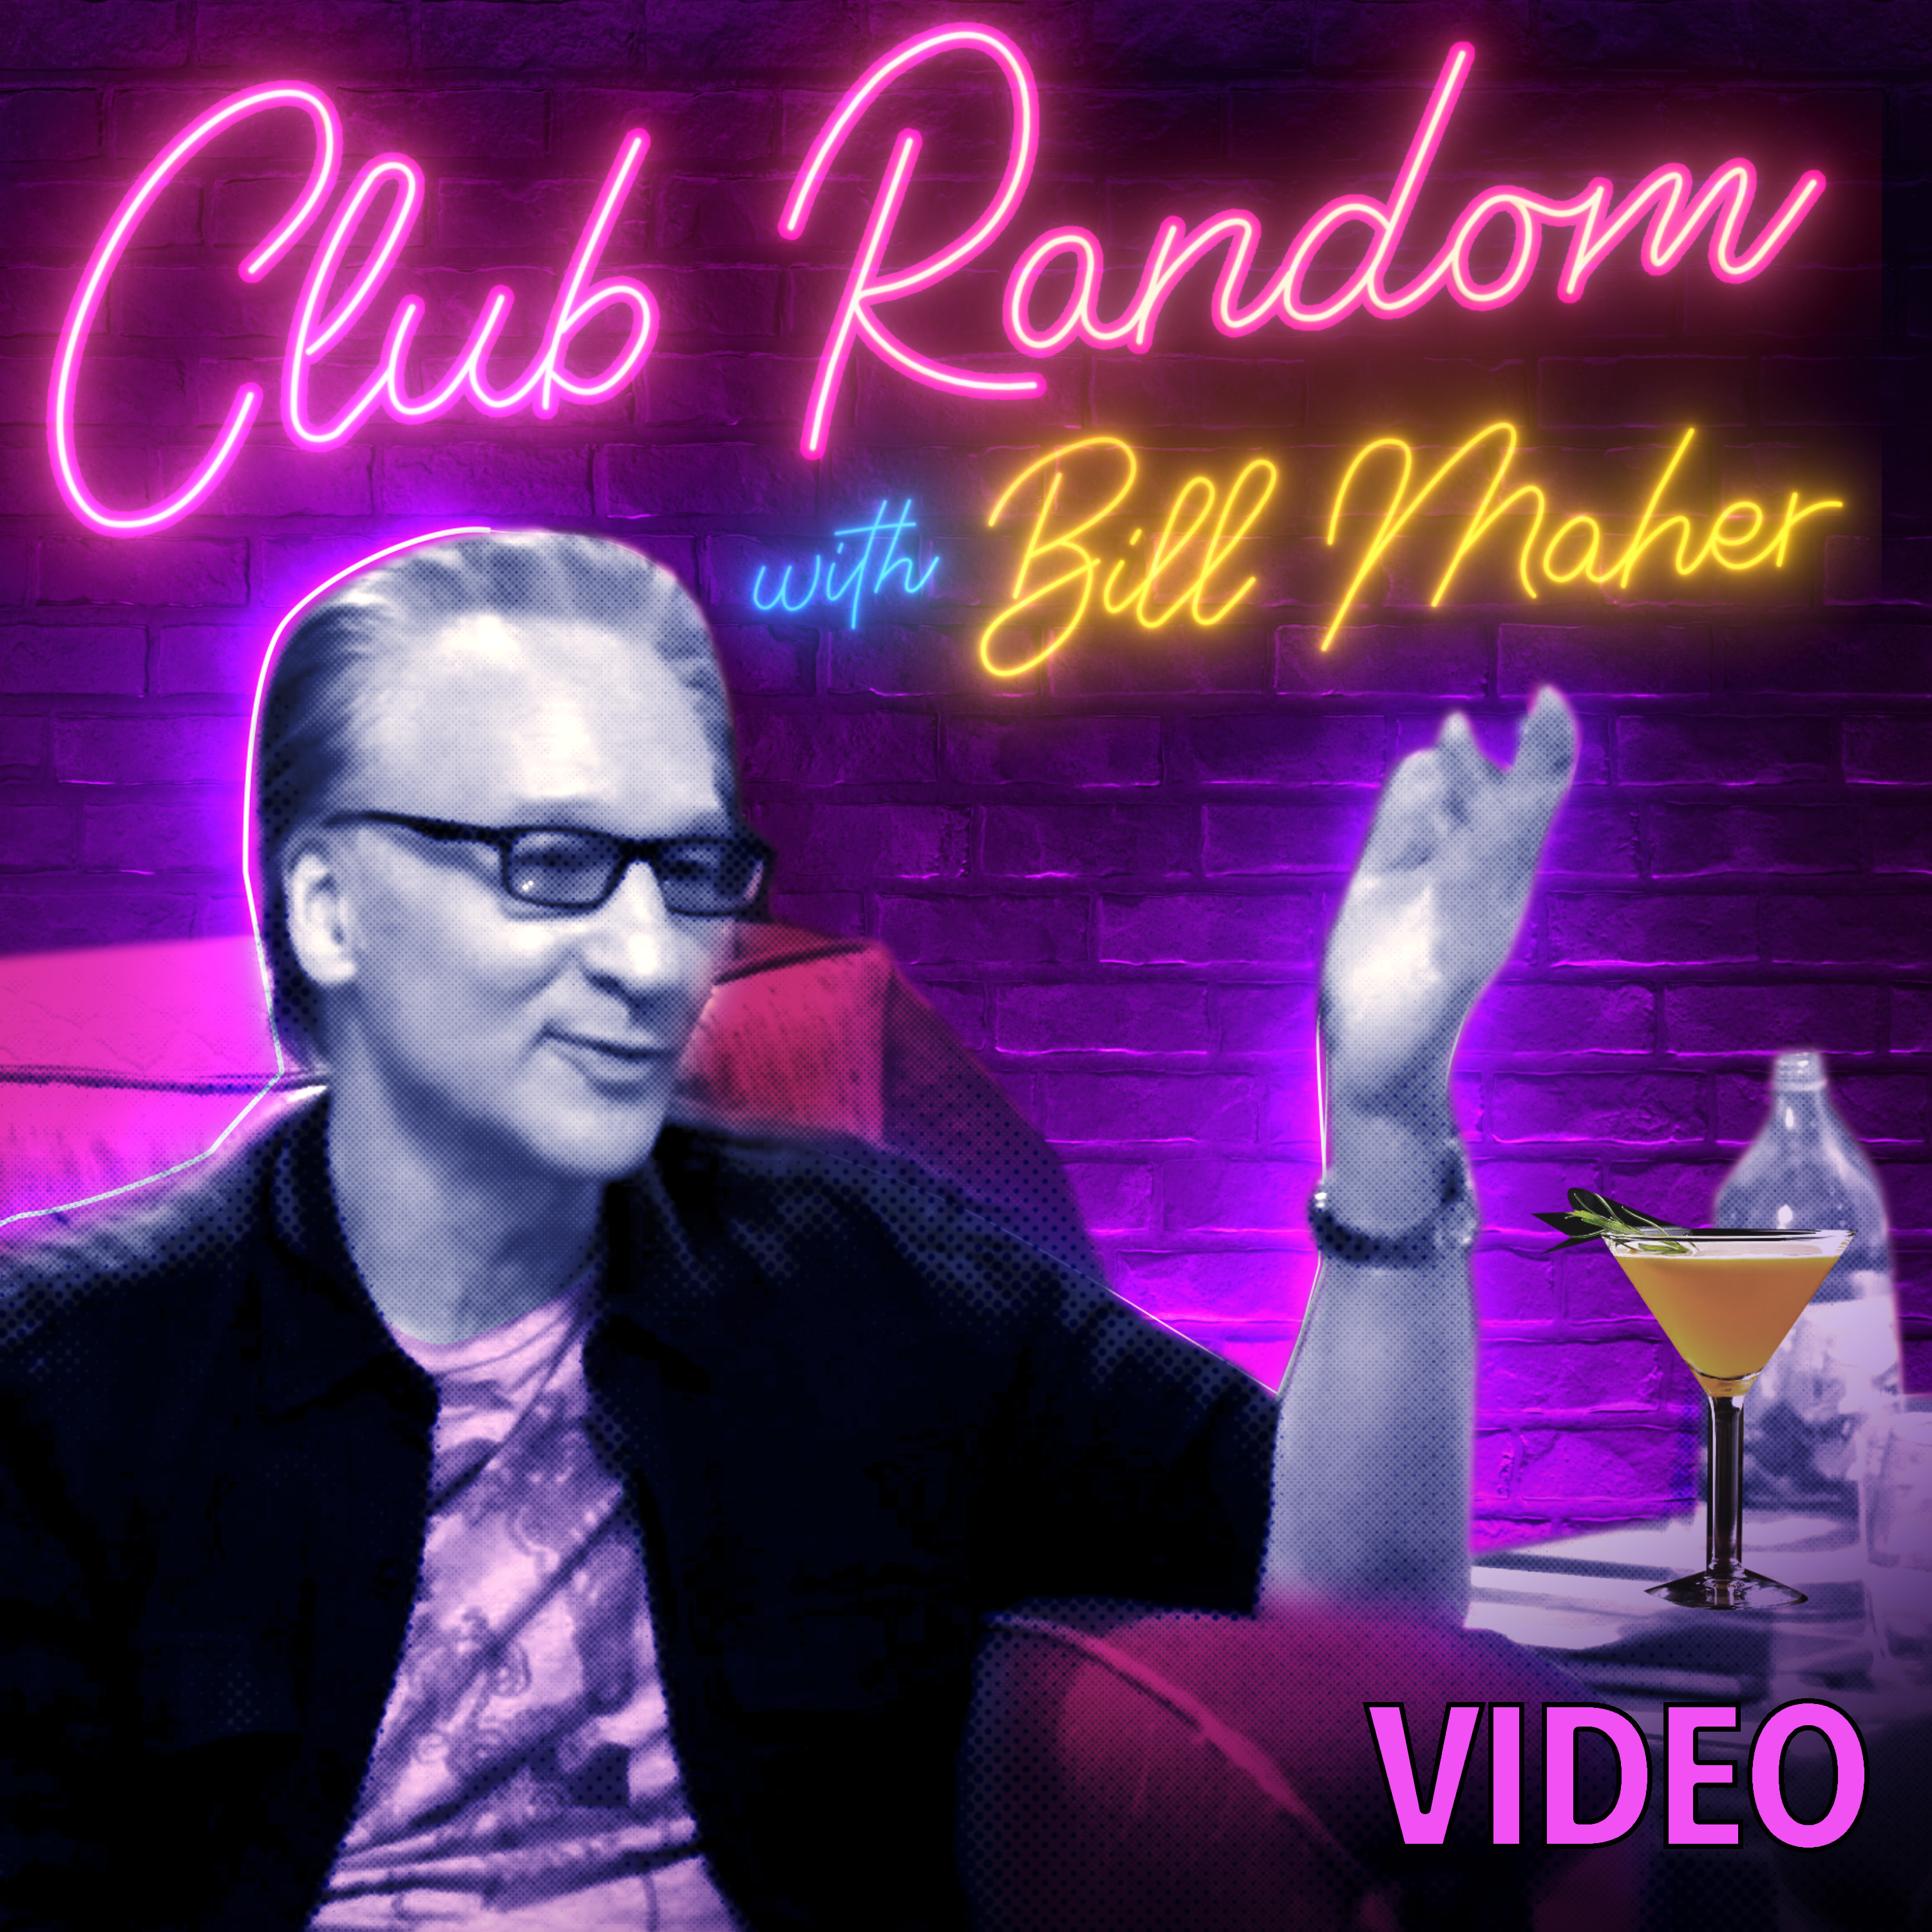 Video: Cameron Crowe | Club Random with Bill Maher